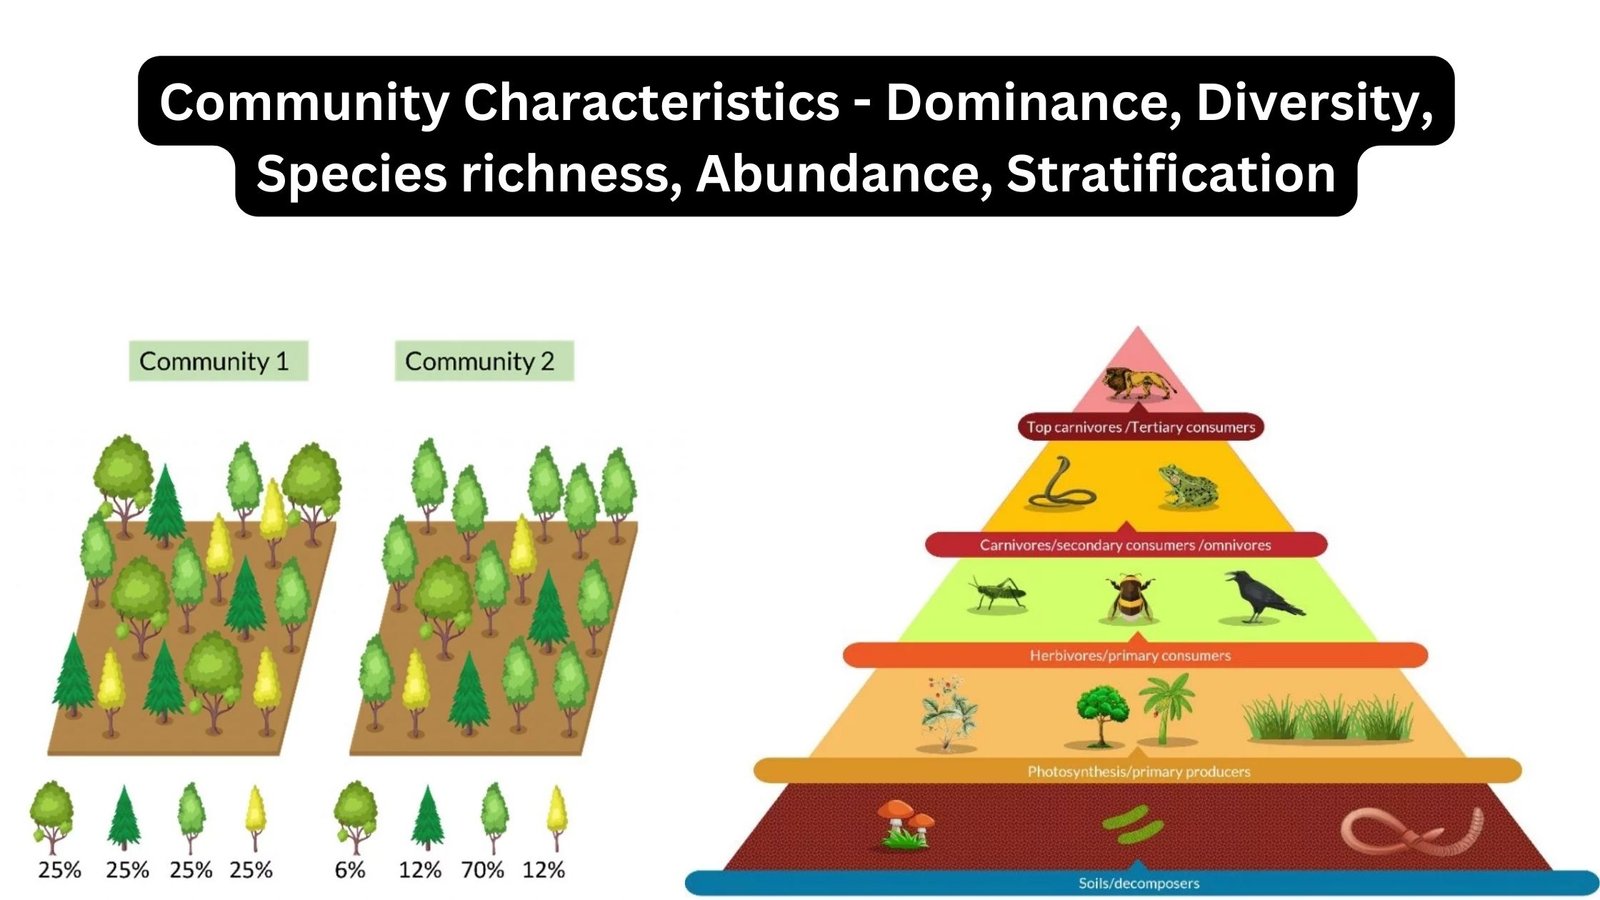 Community Characteristics - Dominance, Diversity, Species richness, Abundance, Stratification